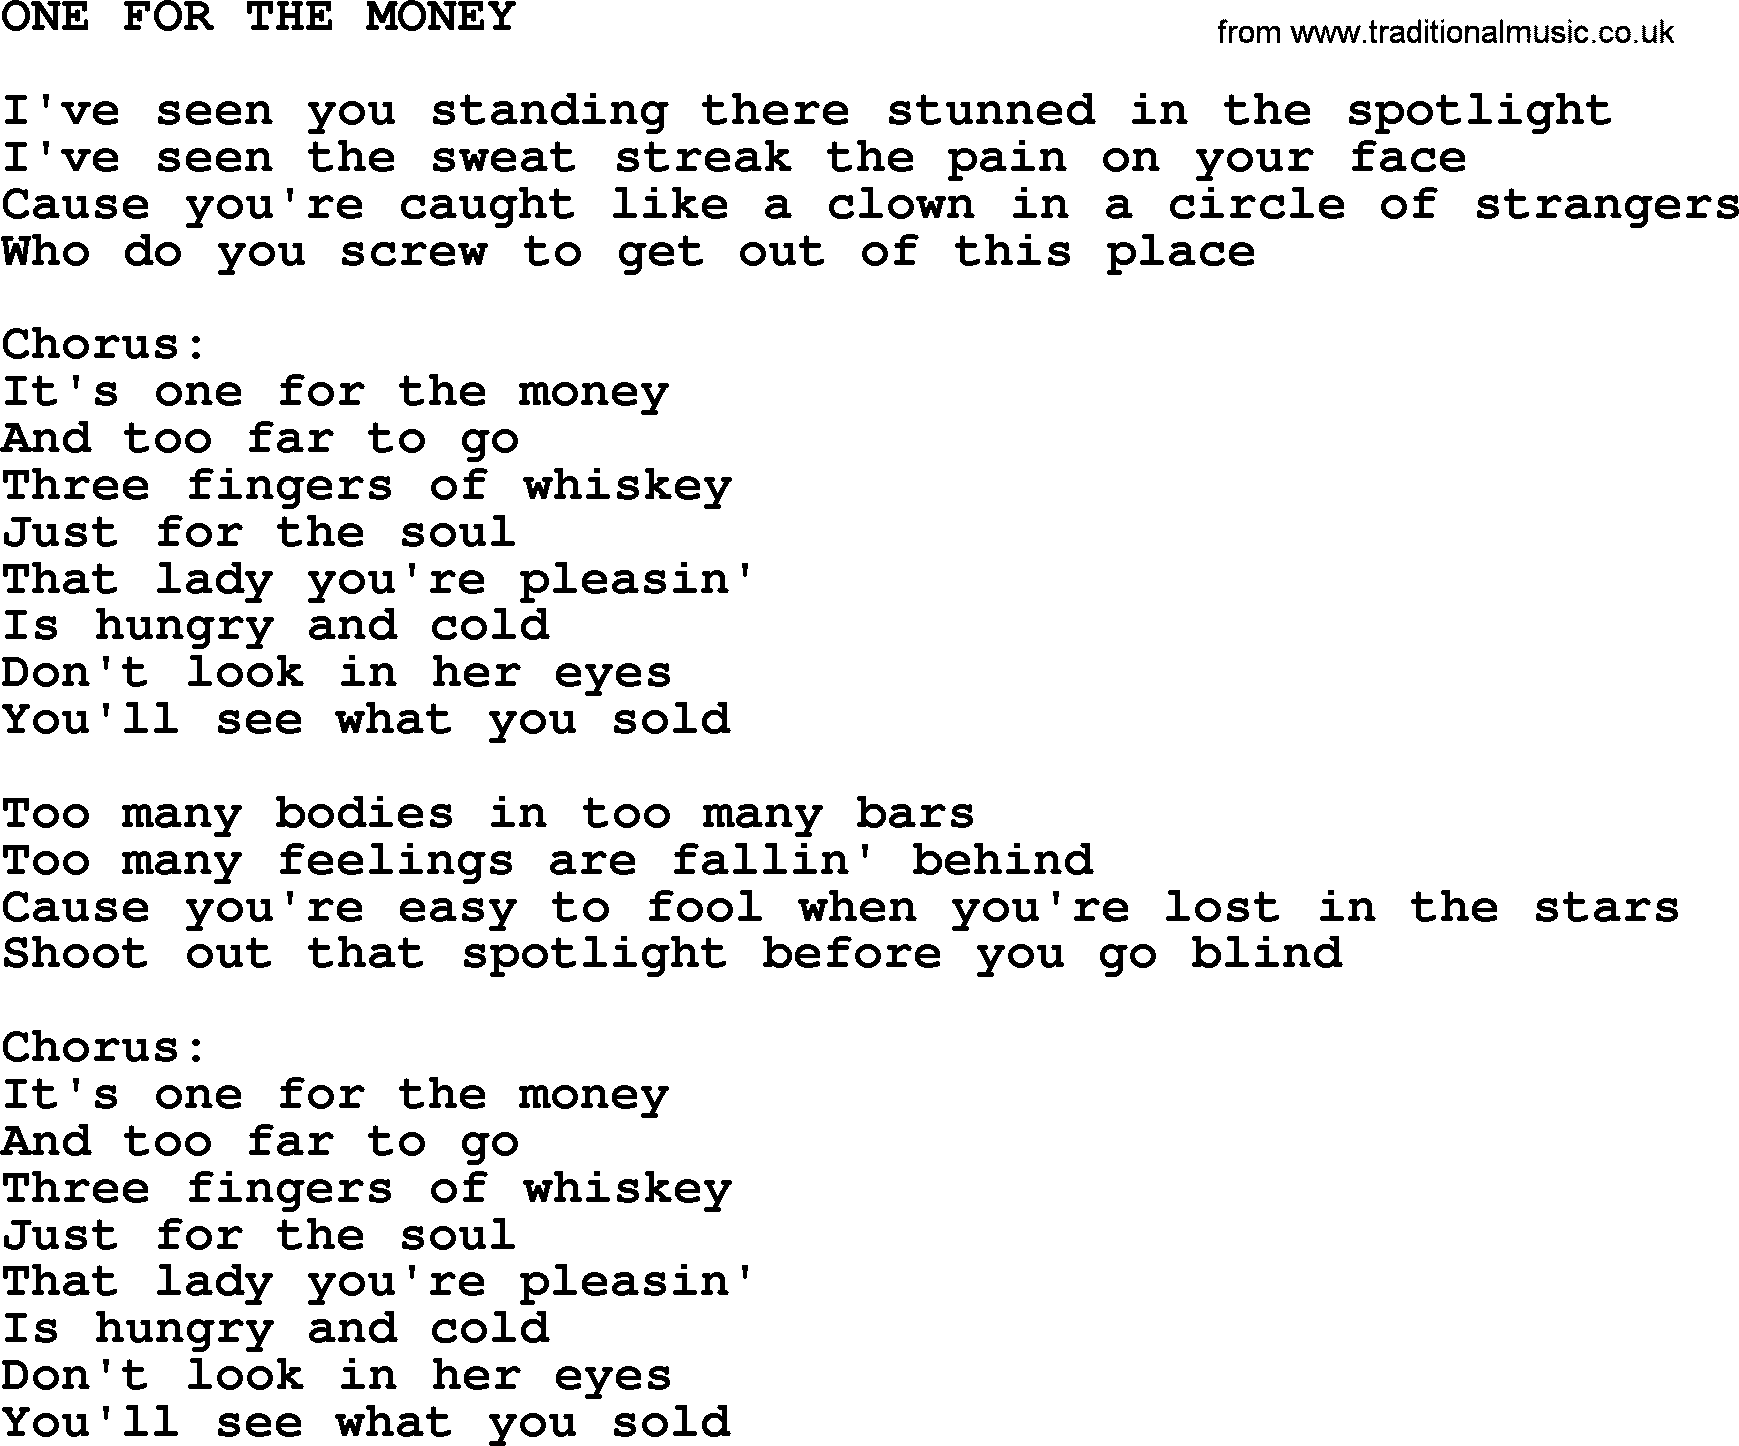 About The Money Lyrics